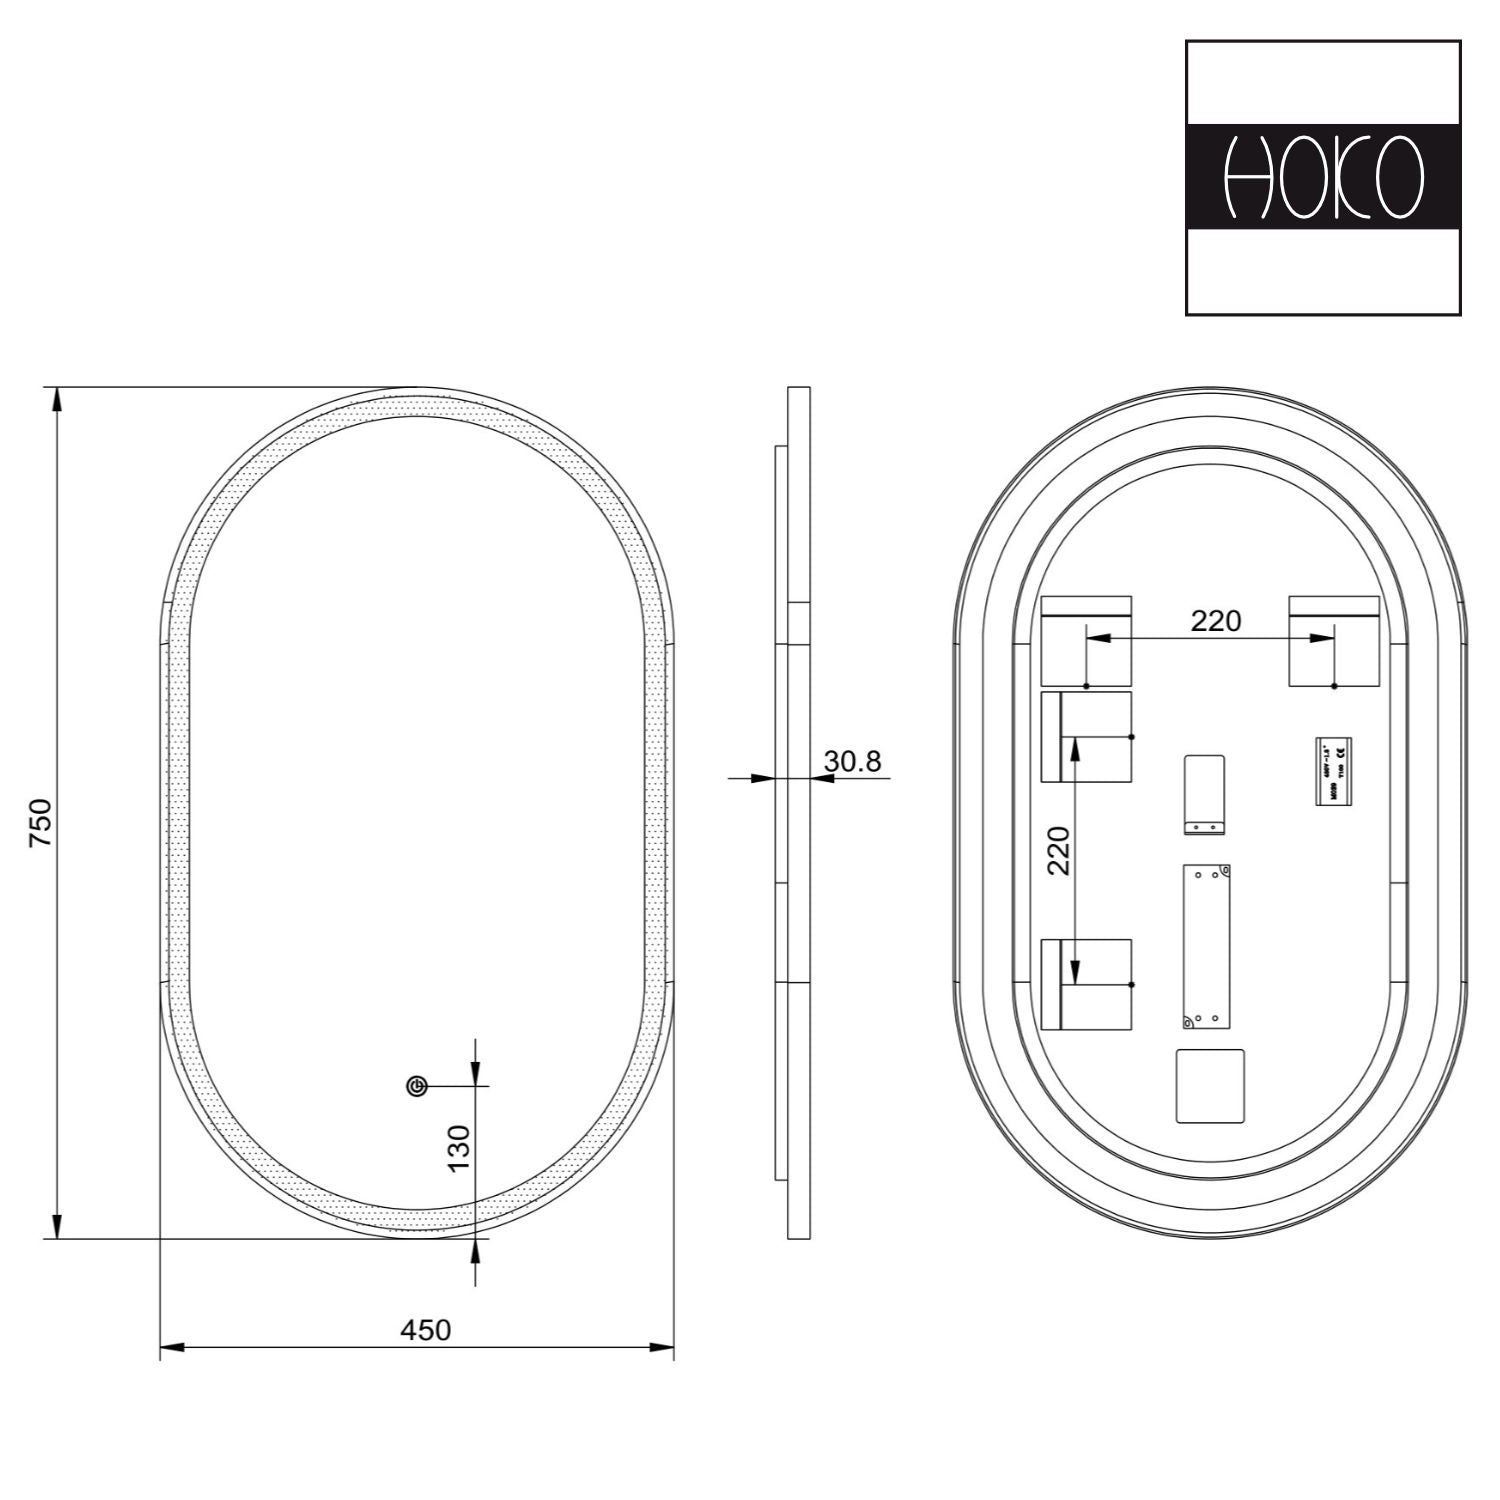 LED design bathroom mirror oval with metal frame matt black. Vertical & horizontal hanging. LED bathroom mirror / dressing table mirror. Light change warm white / cool white